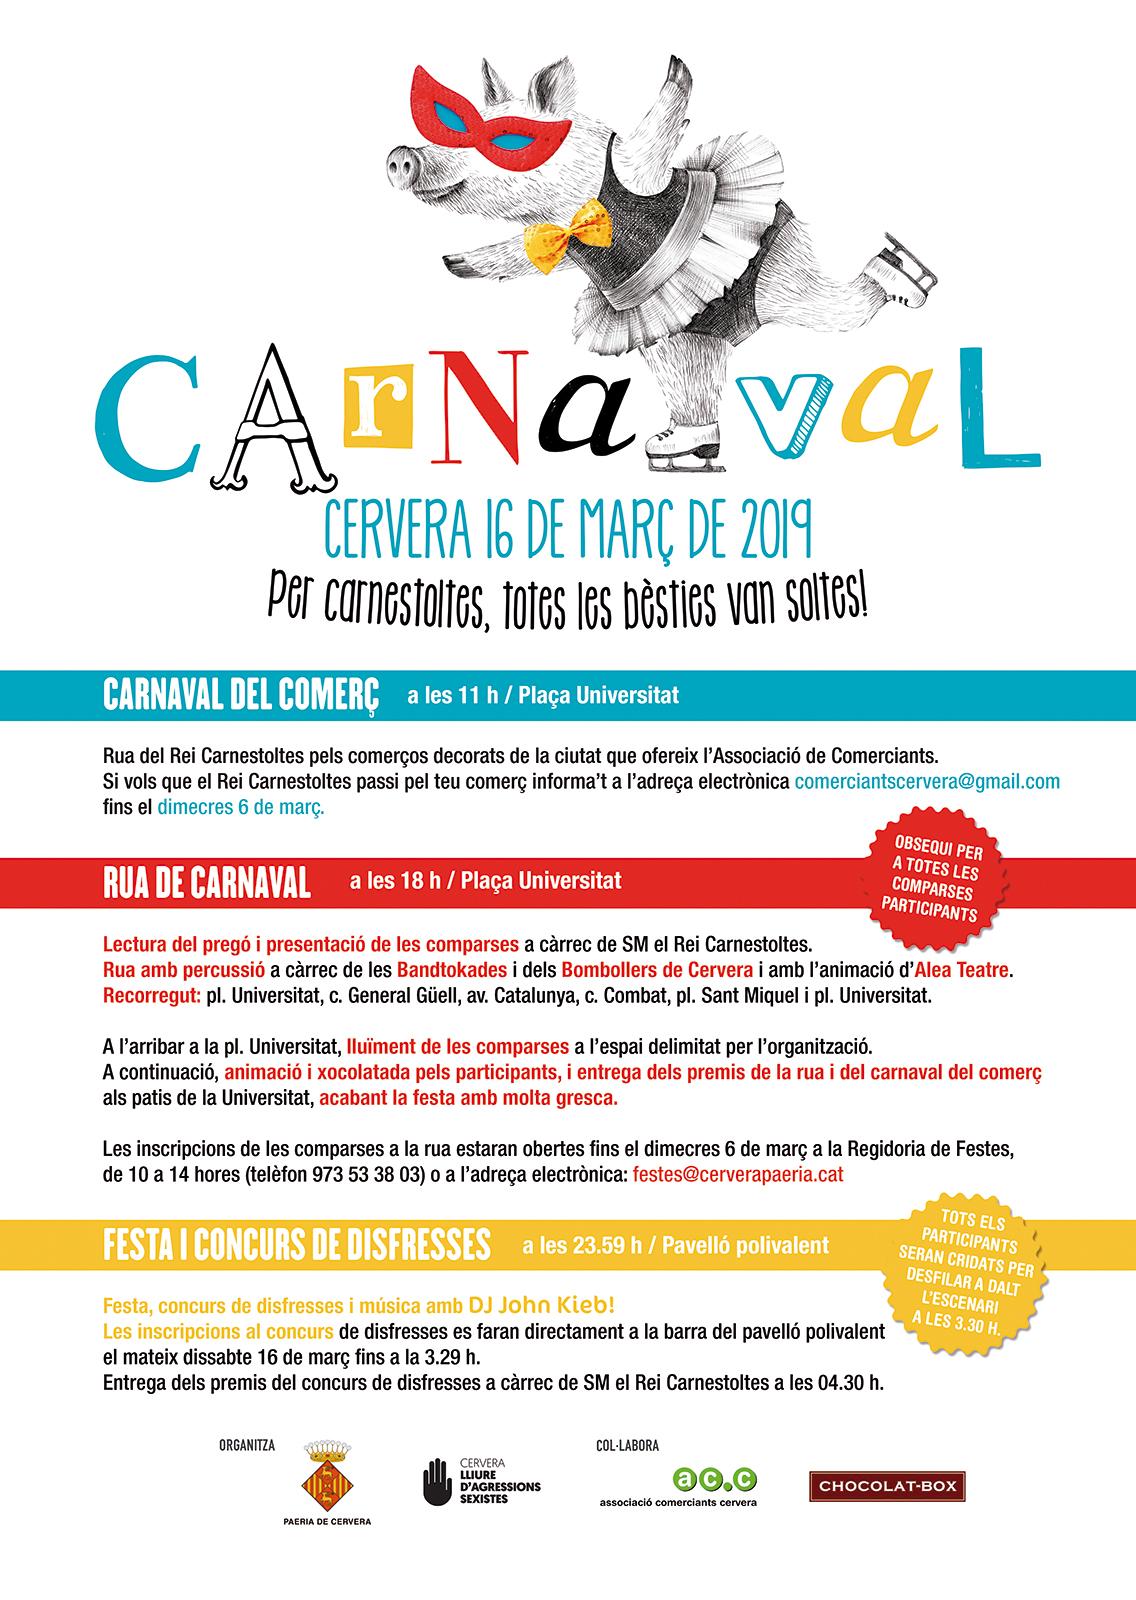 Carnaval Cervera 2019